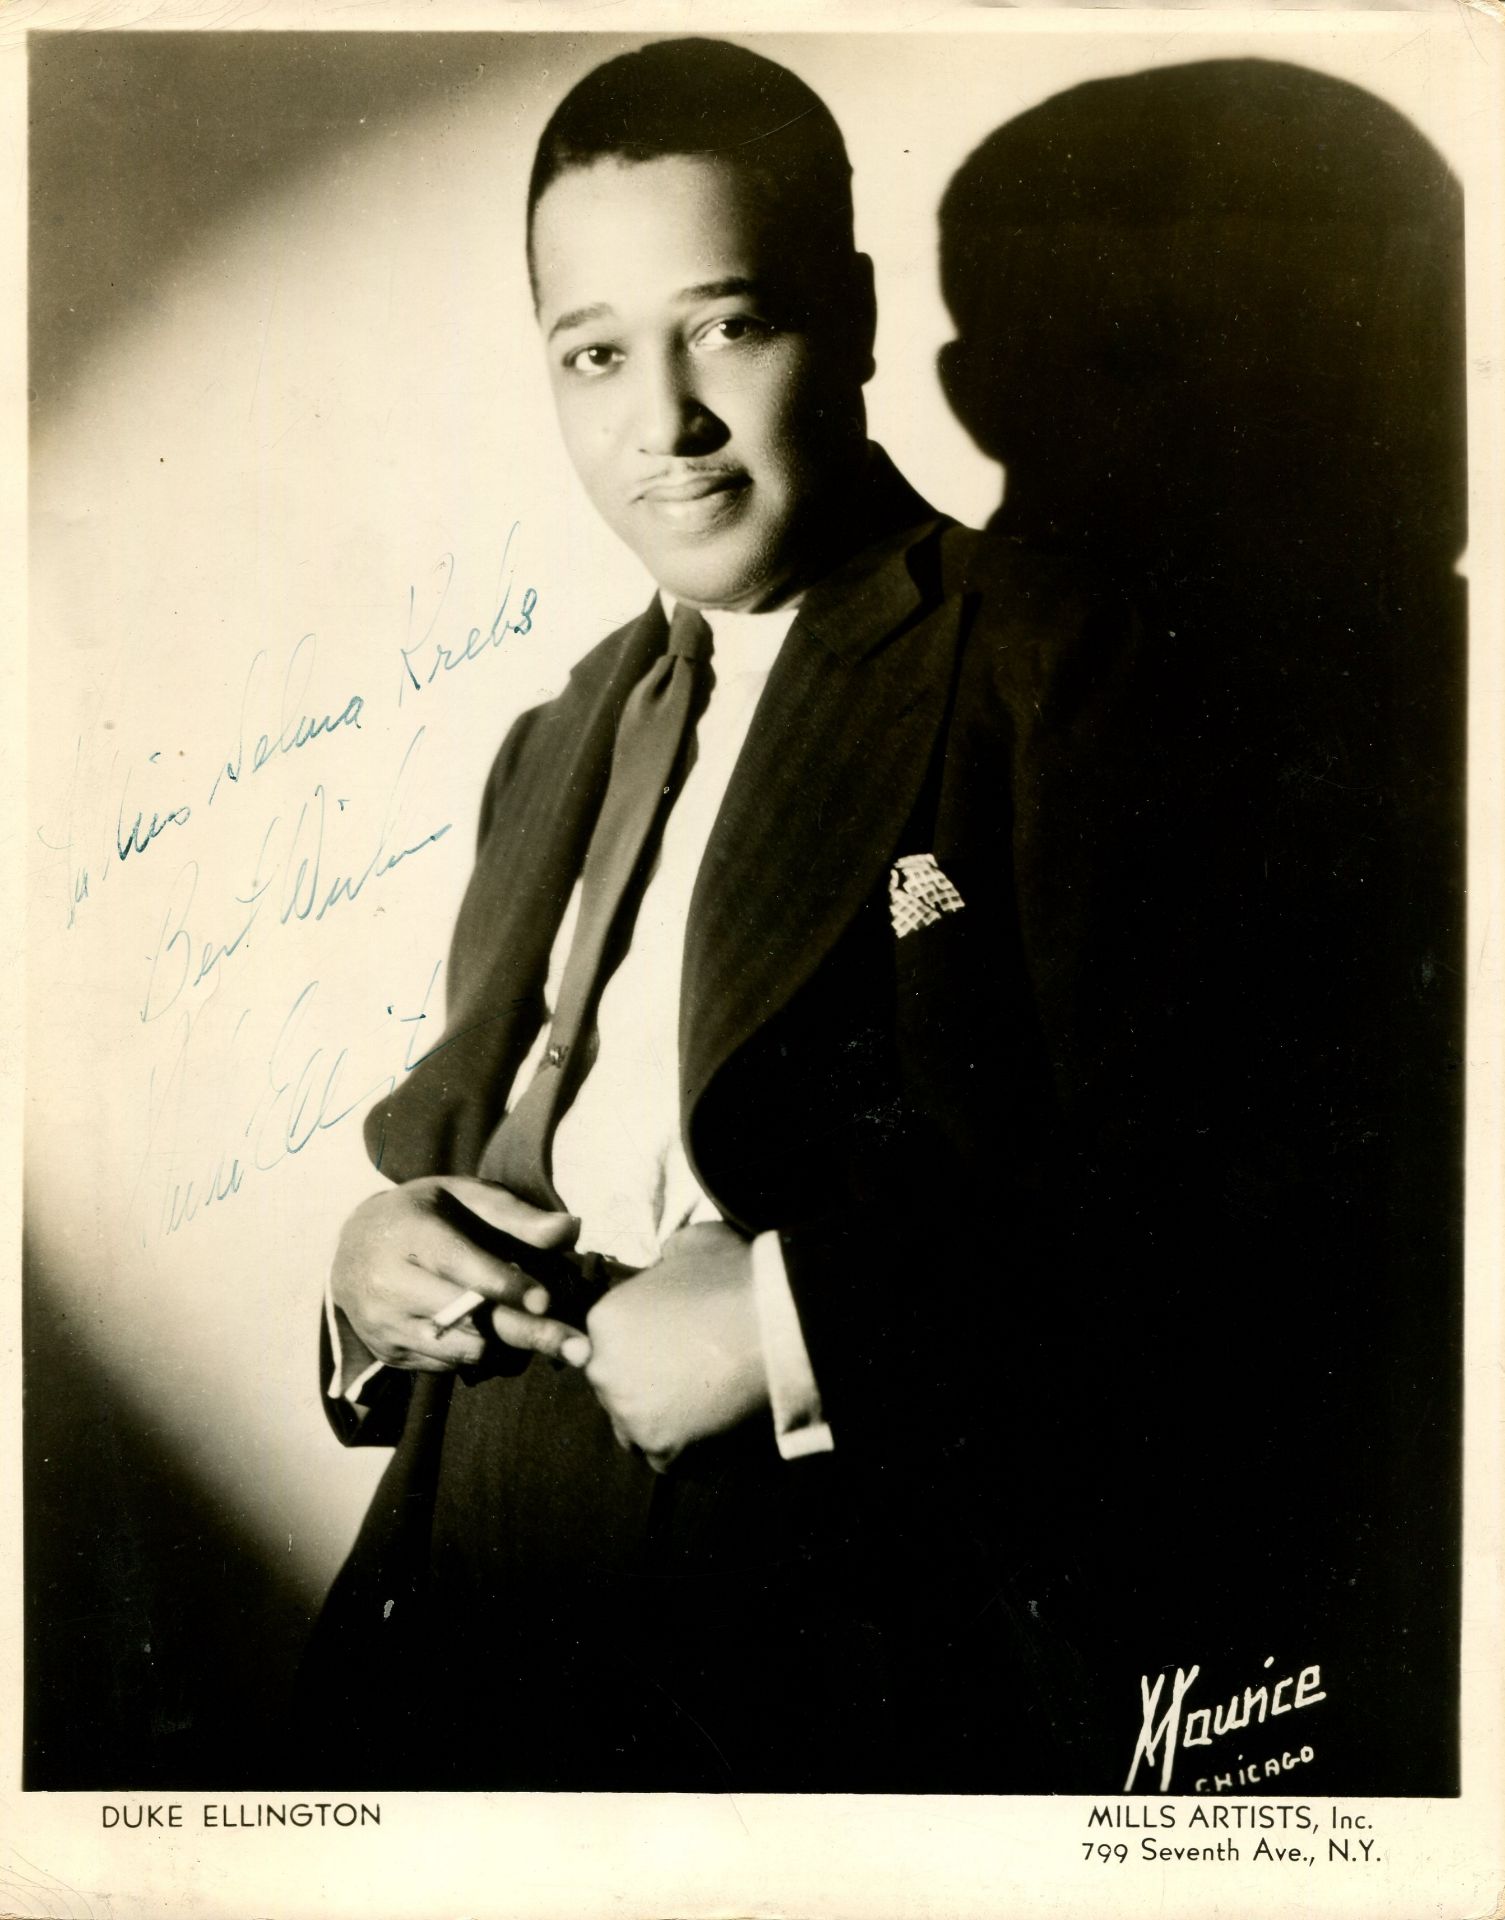 ELLINGTON DUKE: (1899-1974) American jazz composer and pianist.